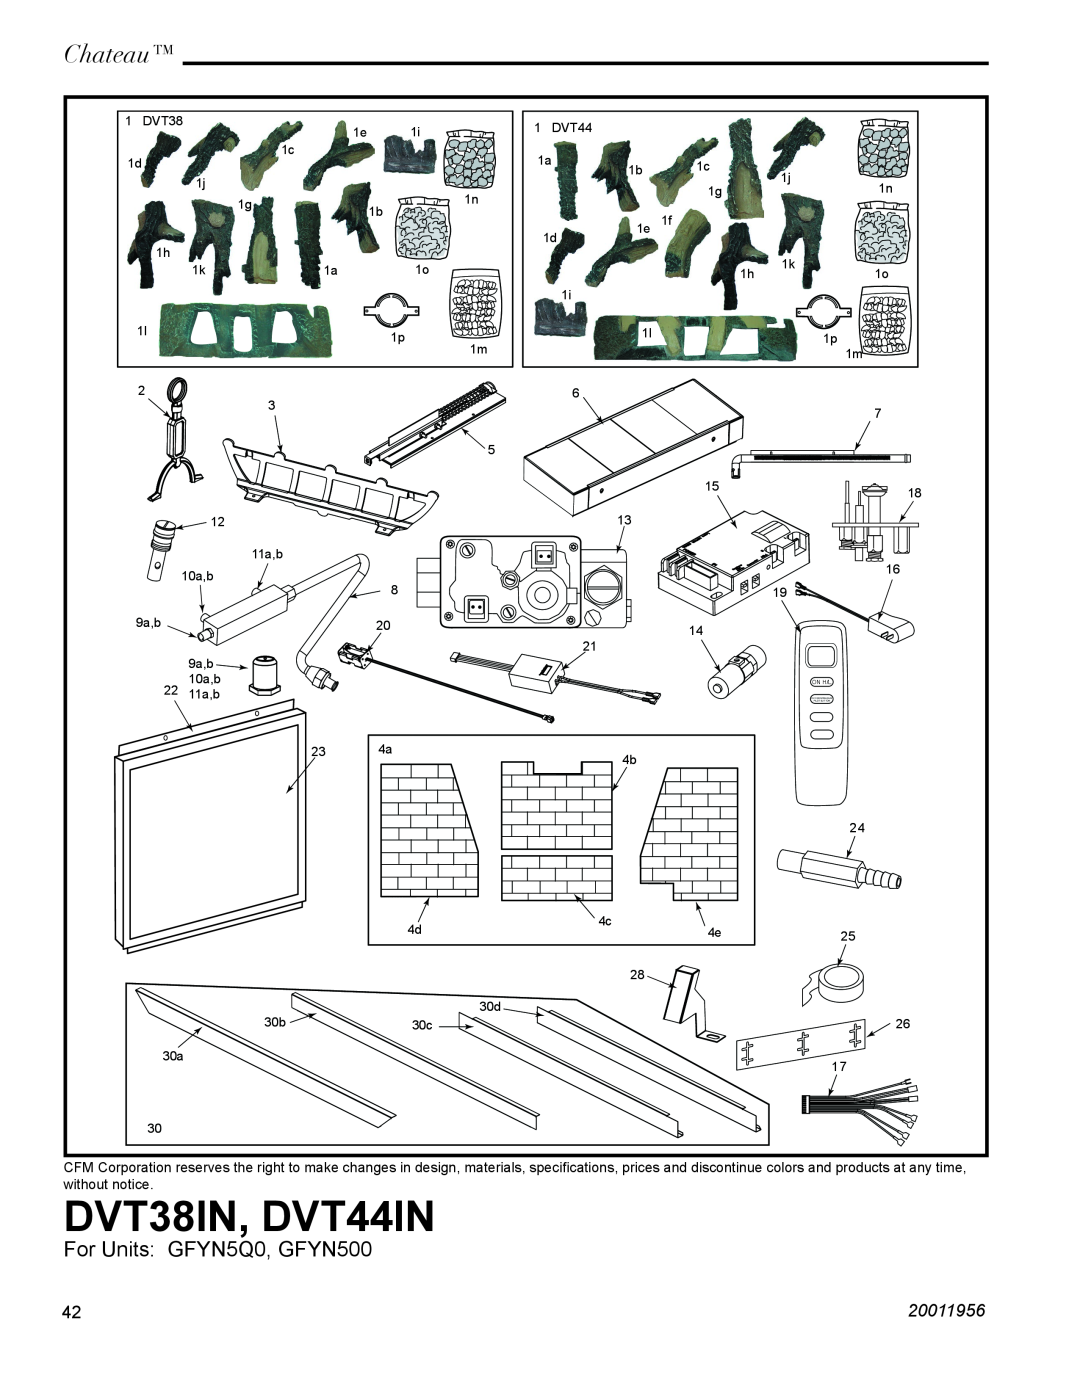 CFM Corporation installation instructions DVT38IN, DVT44IN, For Units GFYN5Q0, GFYN500, Chateau, 20011956 